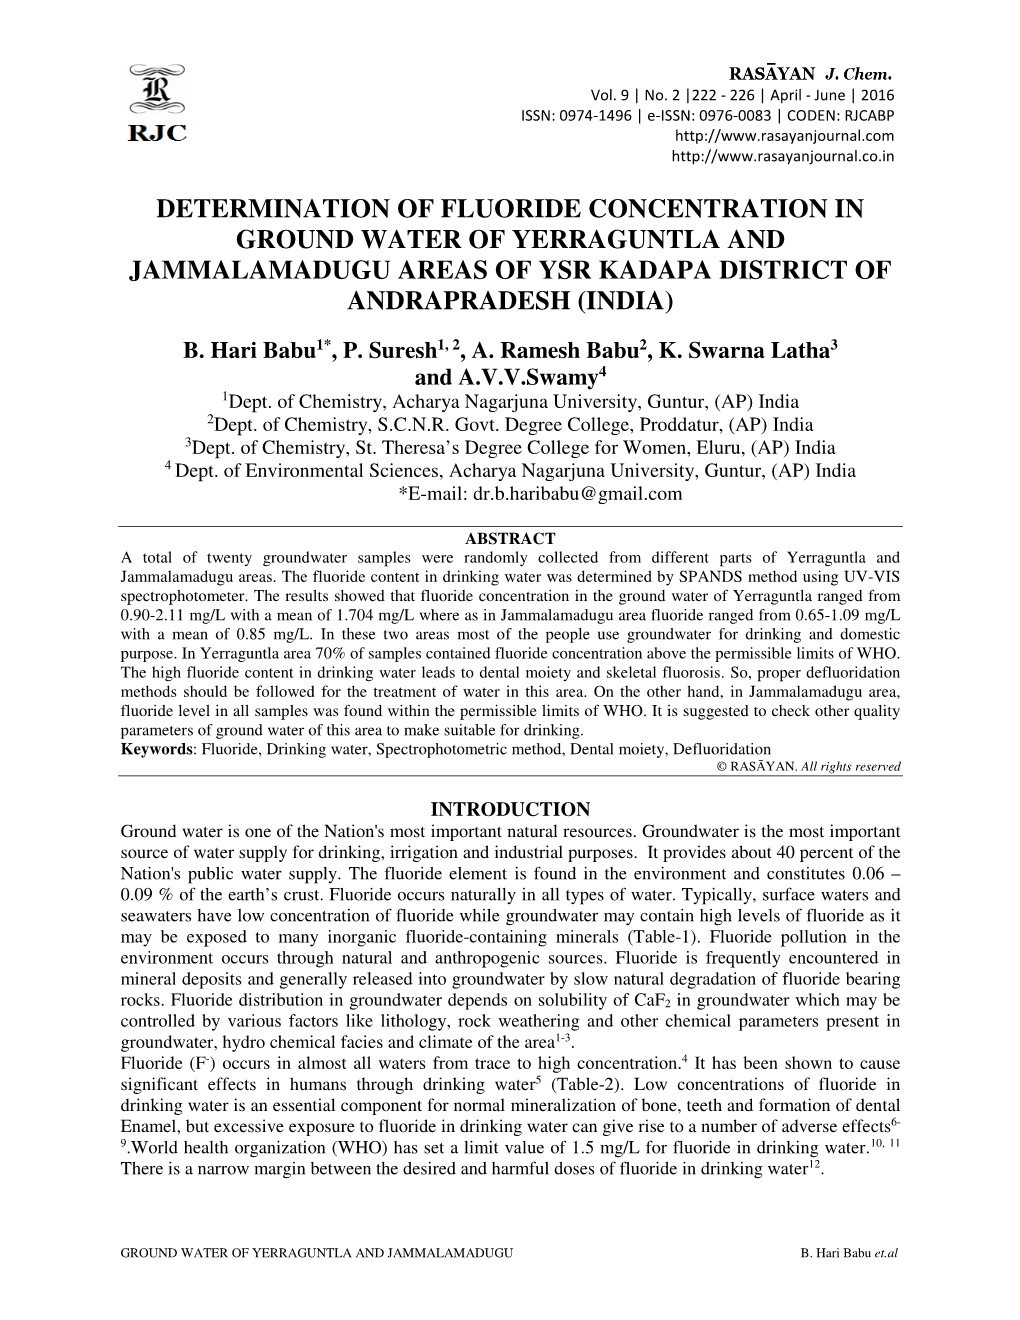 Determination of Fluoride Concentration in Ground Water of Yerraguntla and Jammalamadugu Areas of Ysr Kadapa District of Andrapradesh (India)